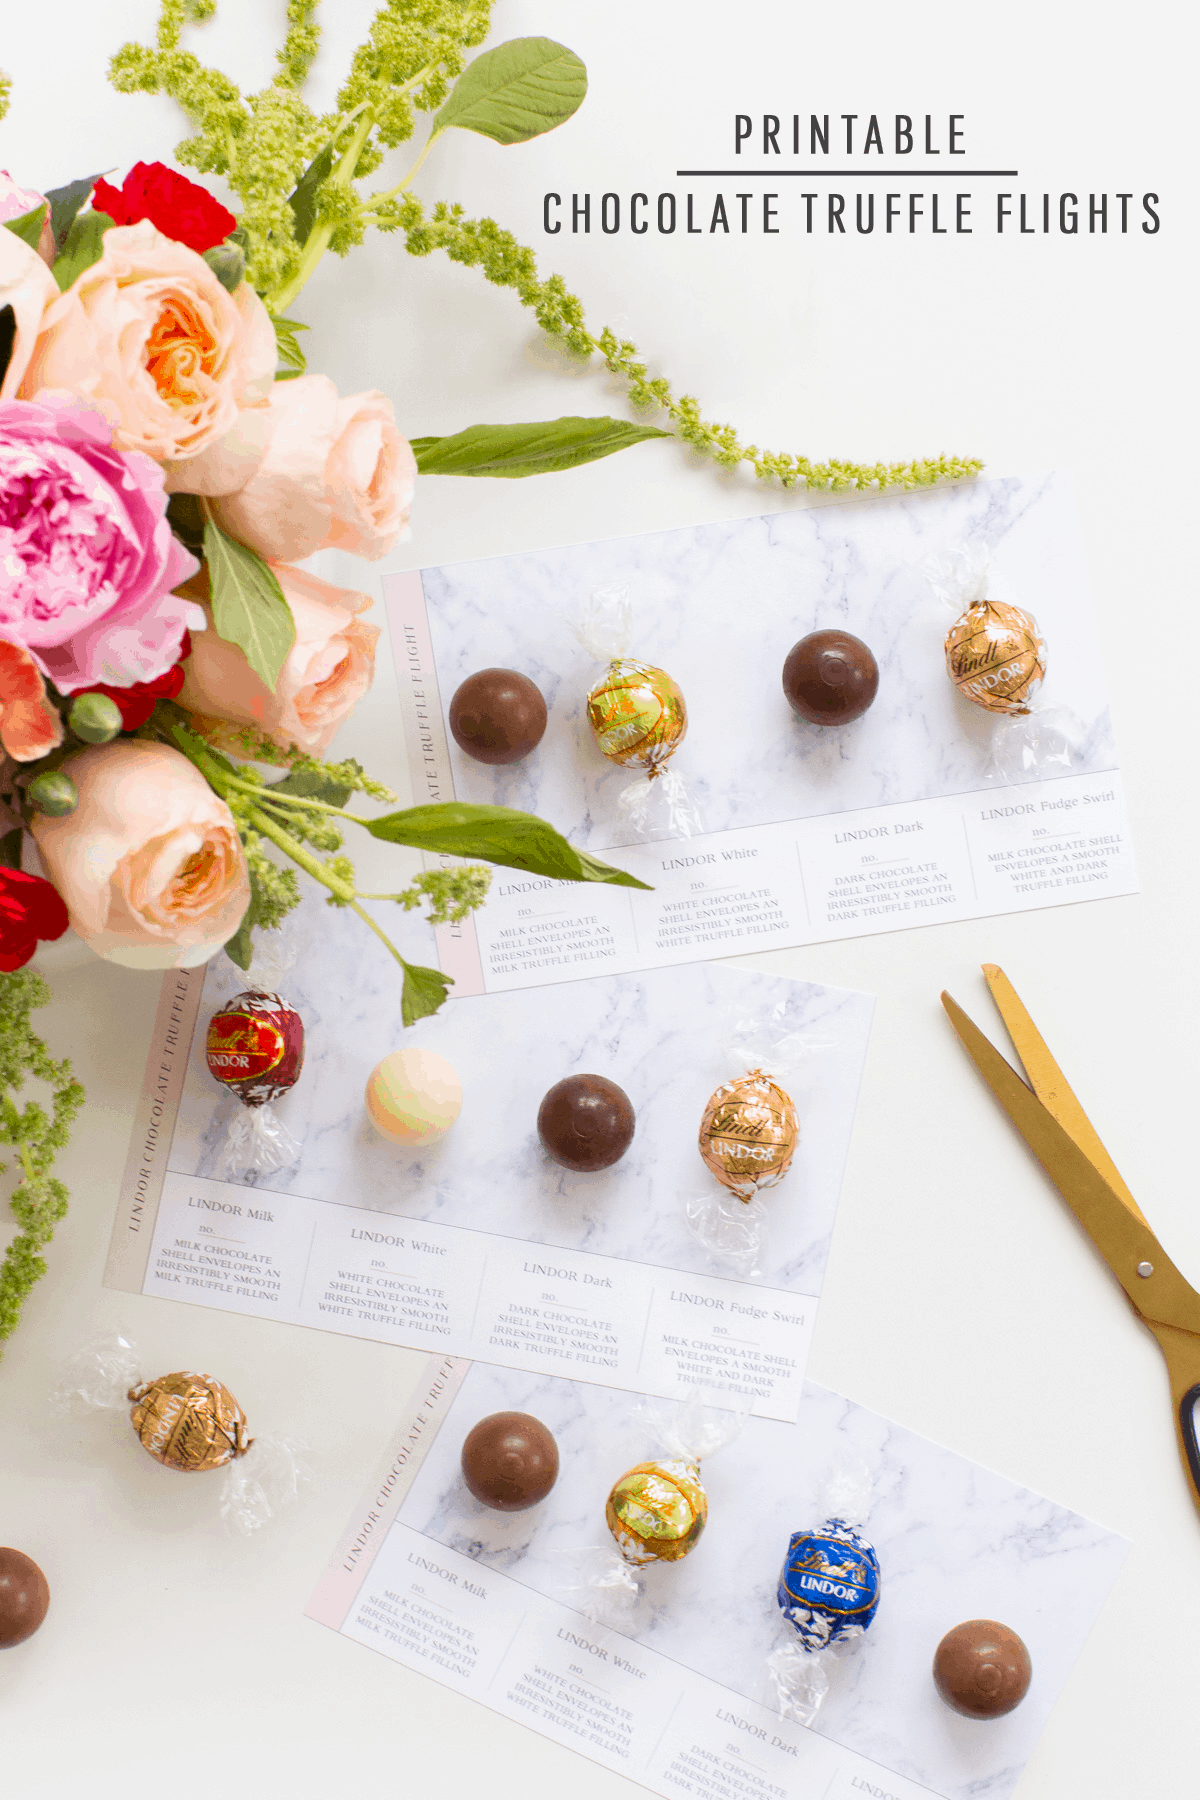 DIY chocolate truffle flight printables by Ashley Rose of top houston lifestyle blog, Sugar and Cloth